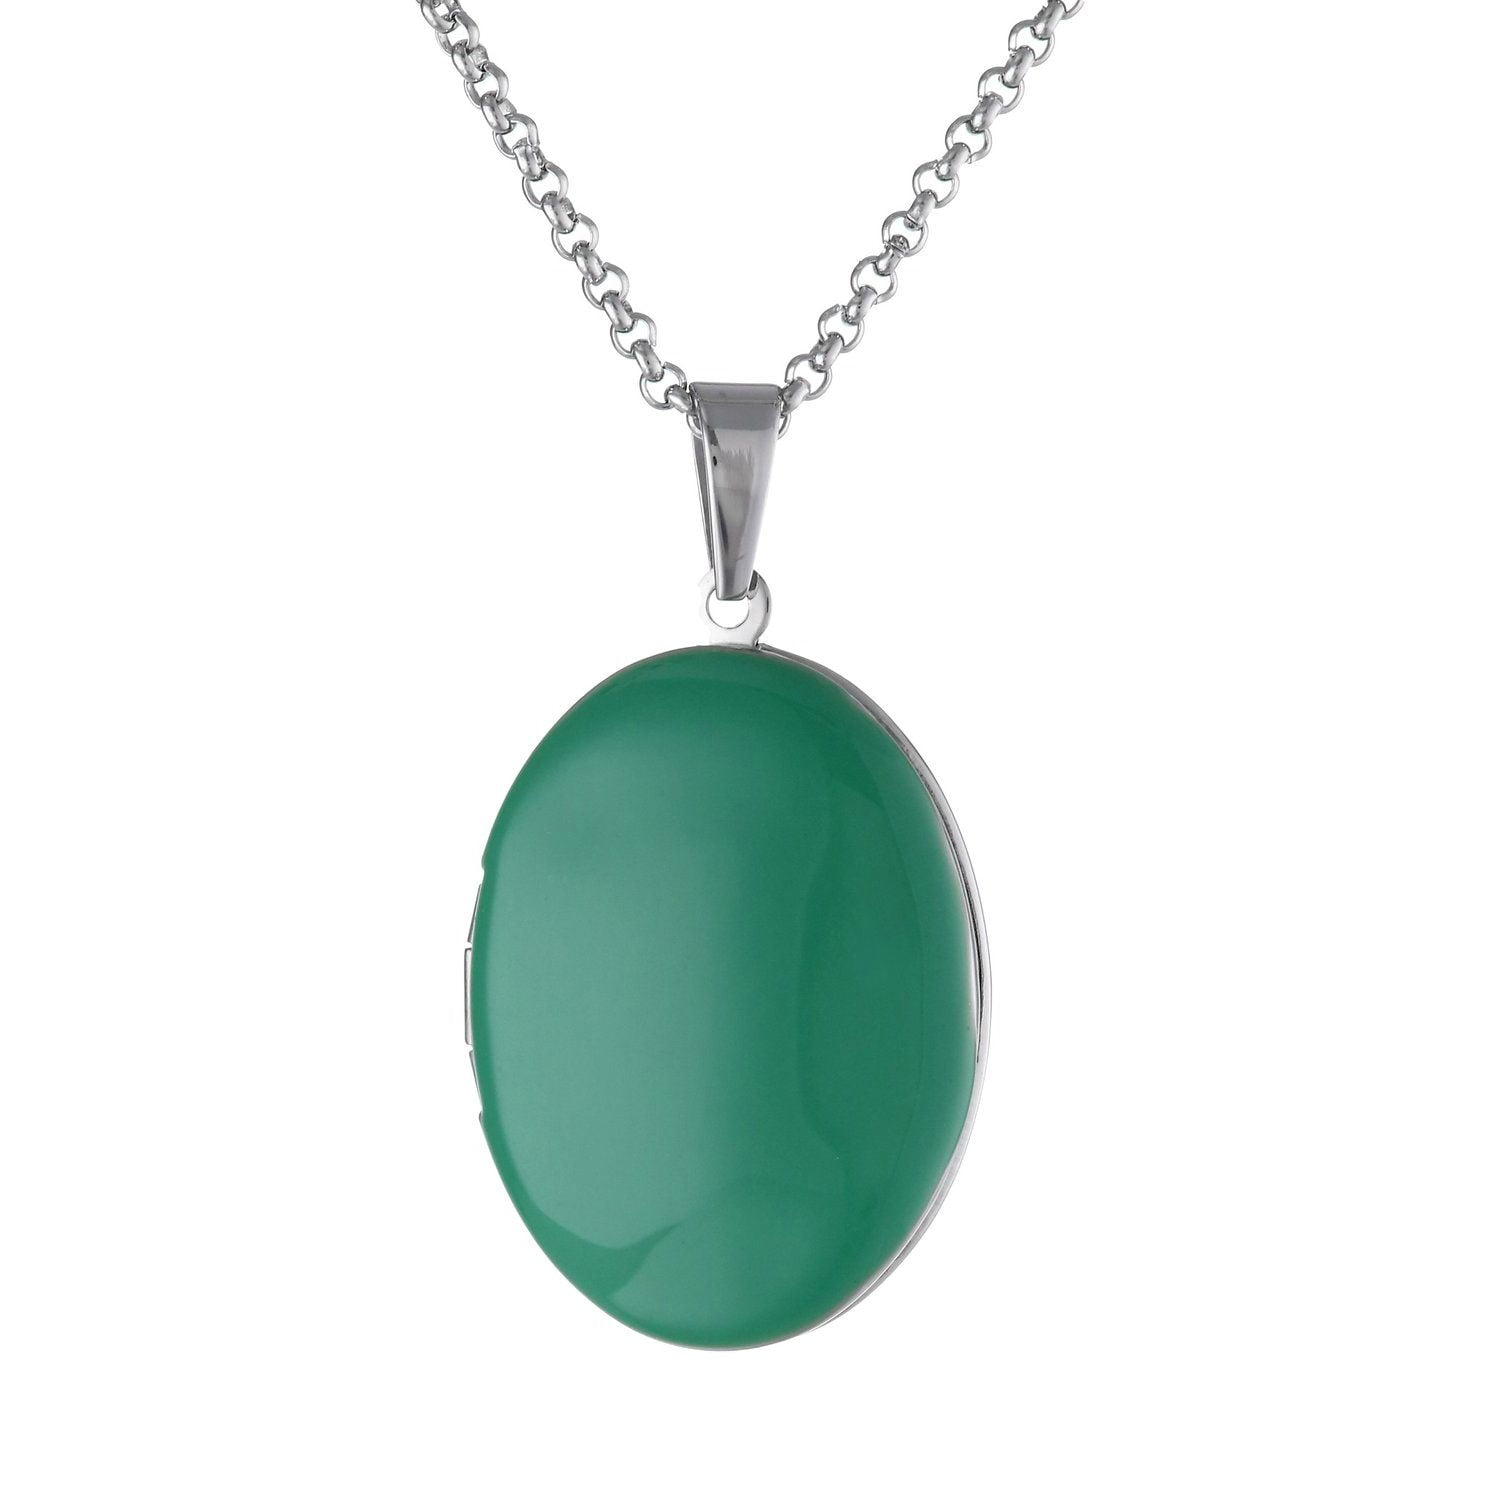 Metro Jewelry Stainless Steel Green Enamel Locket Pendant Necklace